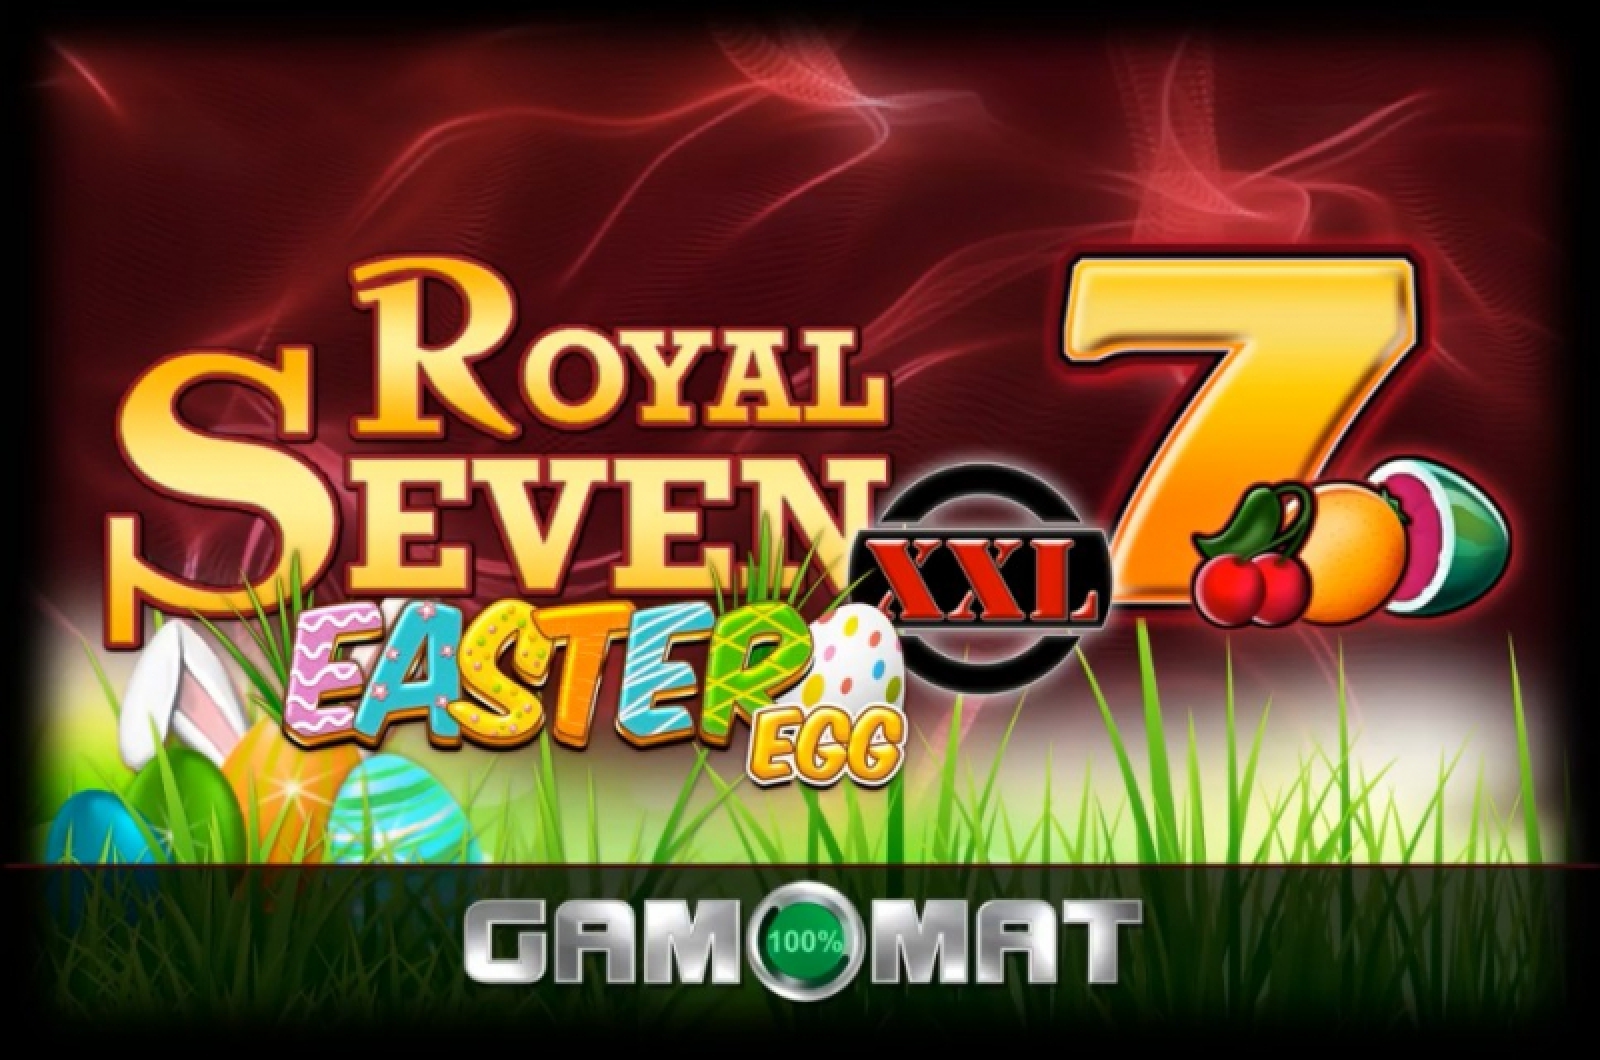 Royal Seven XXL Easter Egg demo